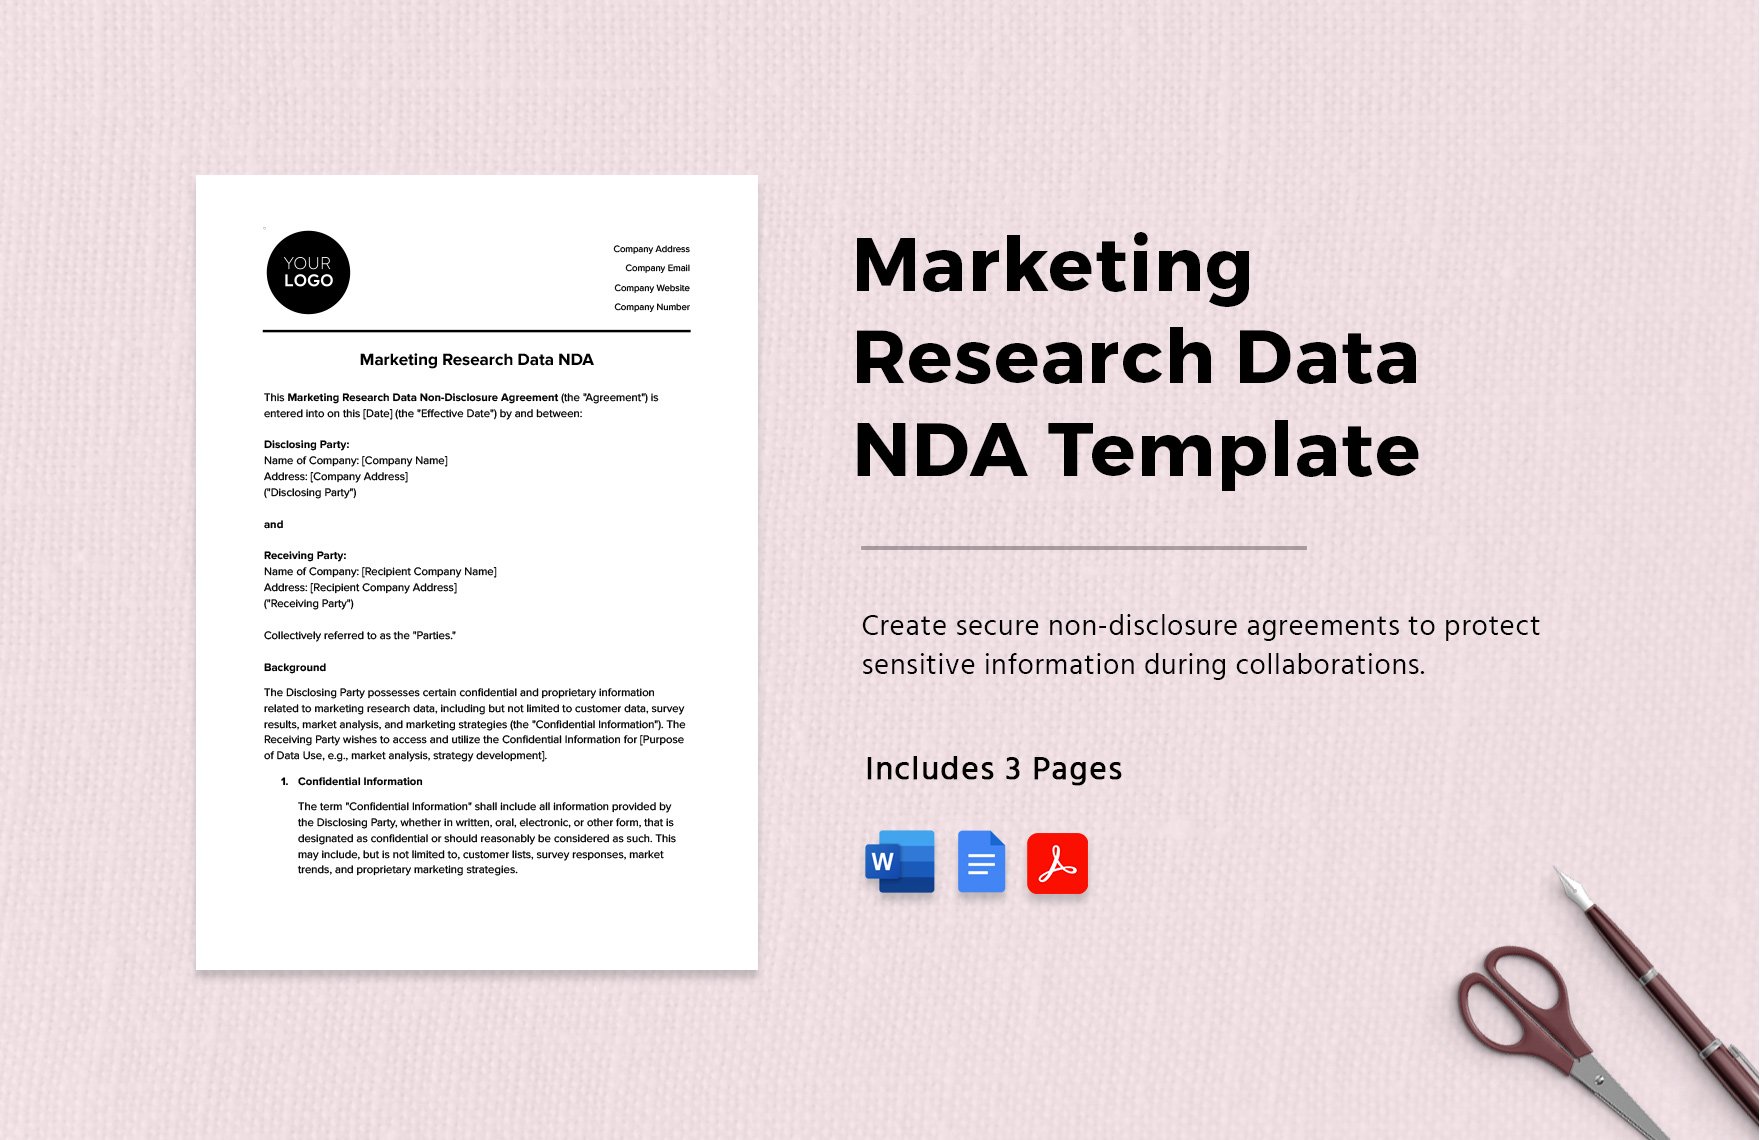 Marketing Research Data NDA Template